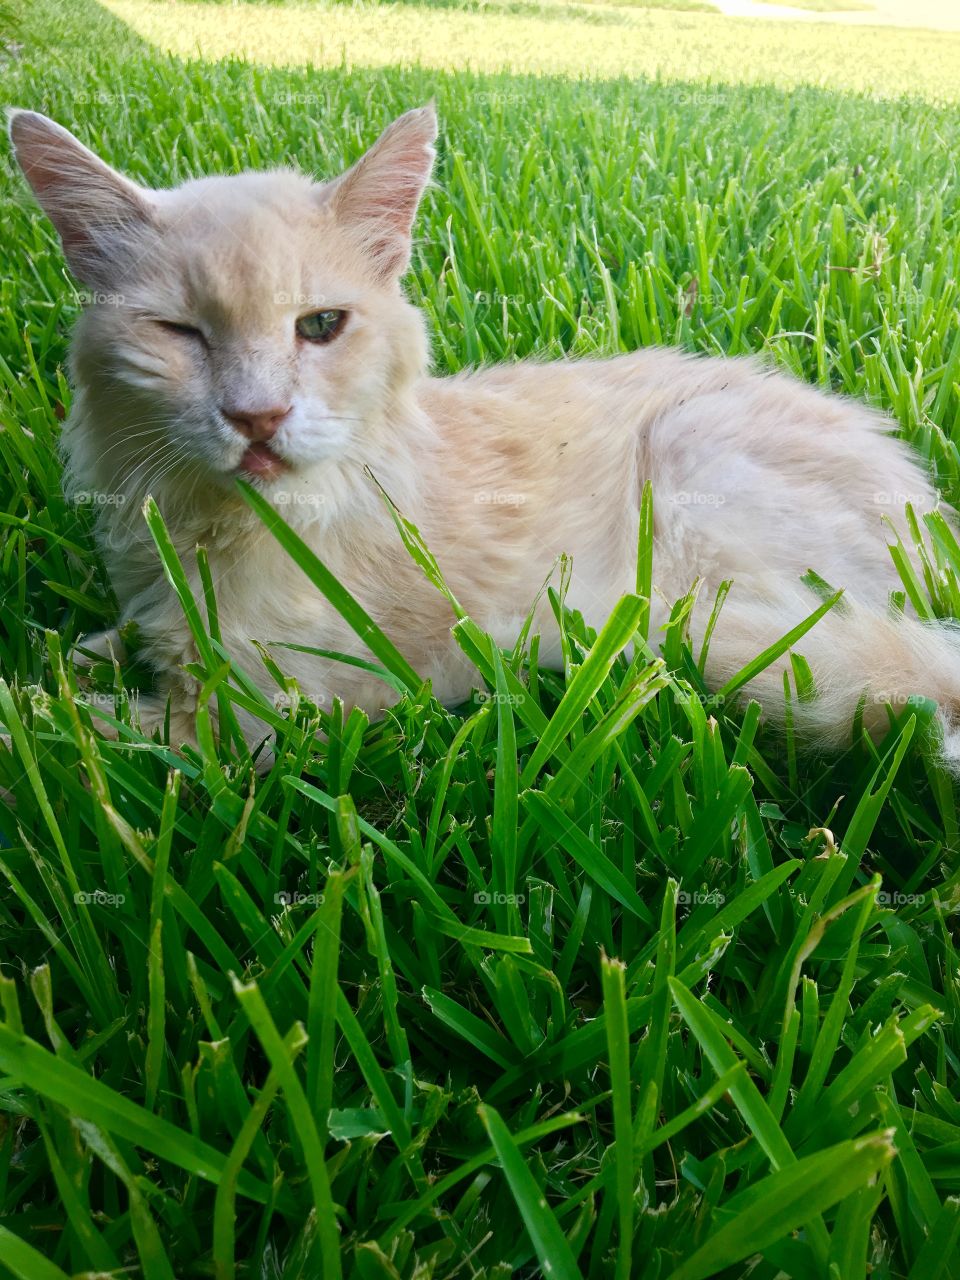 My old kitty enjoying the summer grass 